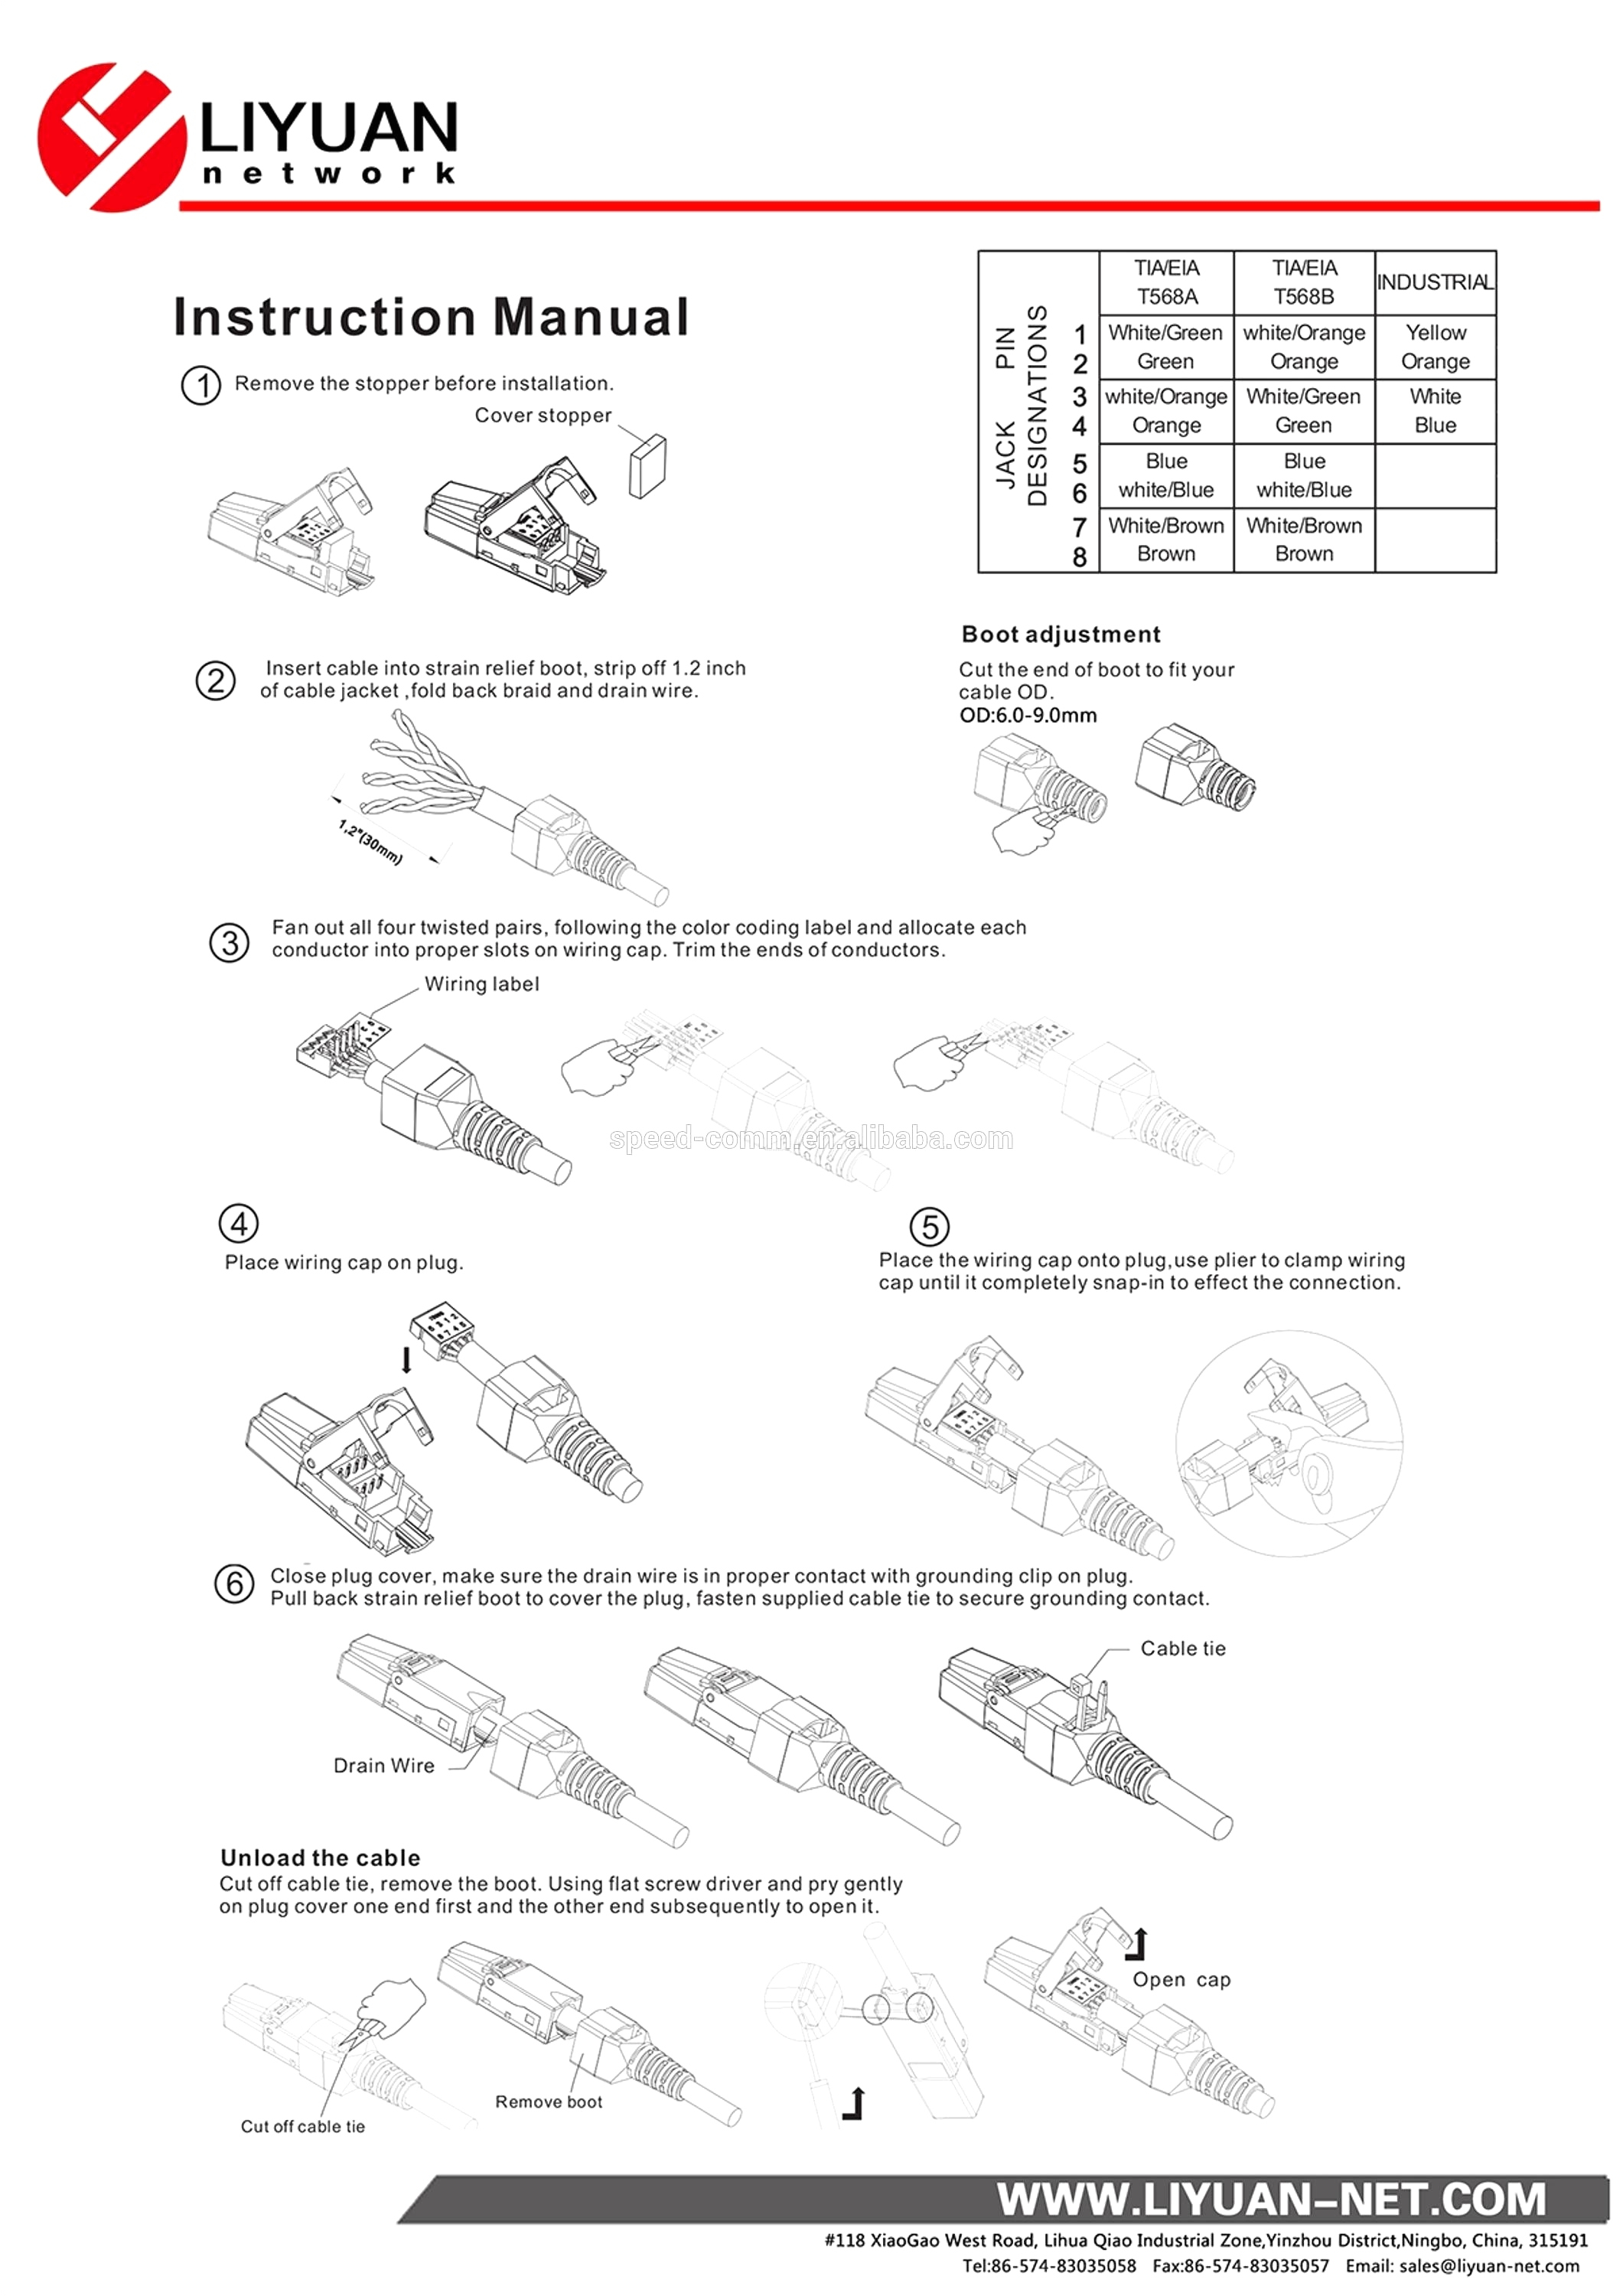 8 wire trailer harness diagram best of trailer junction box wiring diagram fresh 6 prong trailer plug jpg